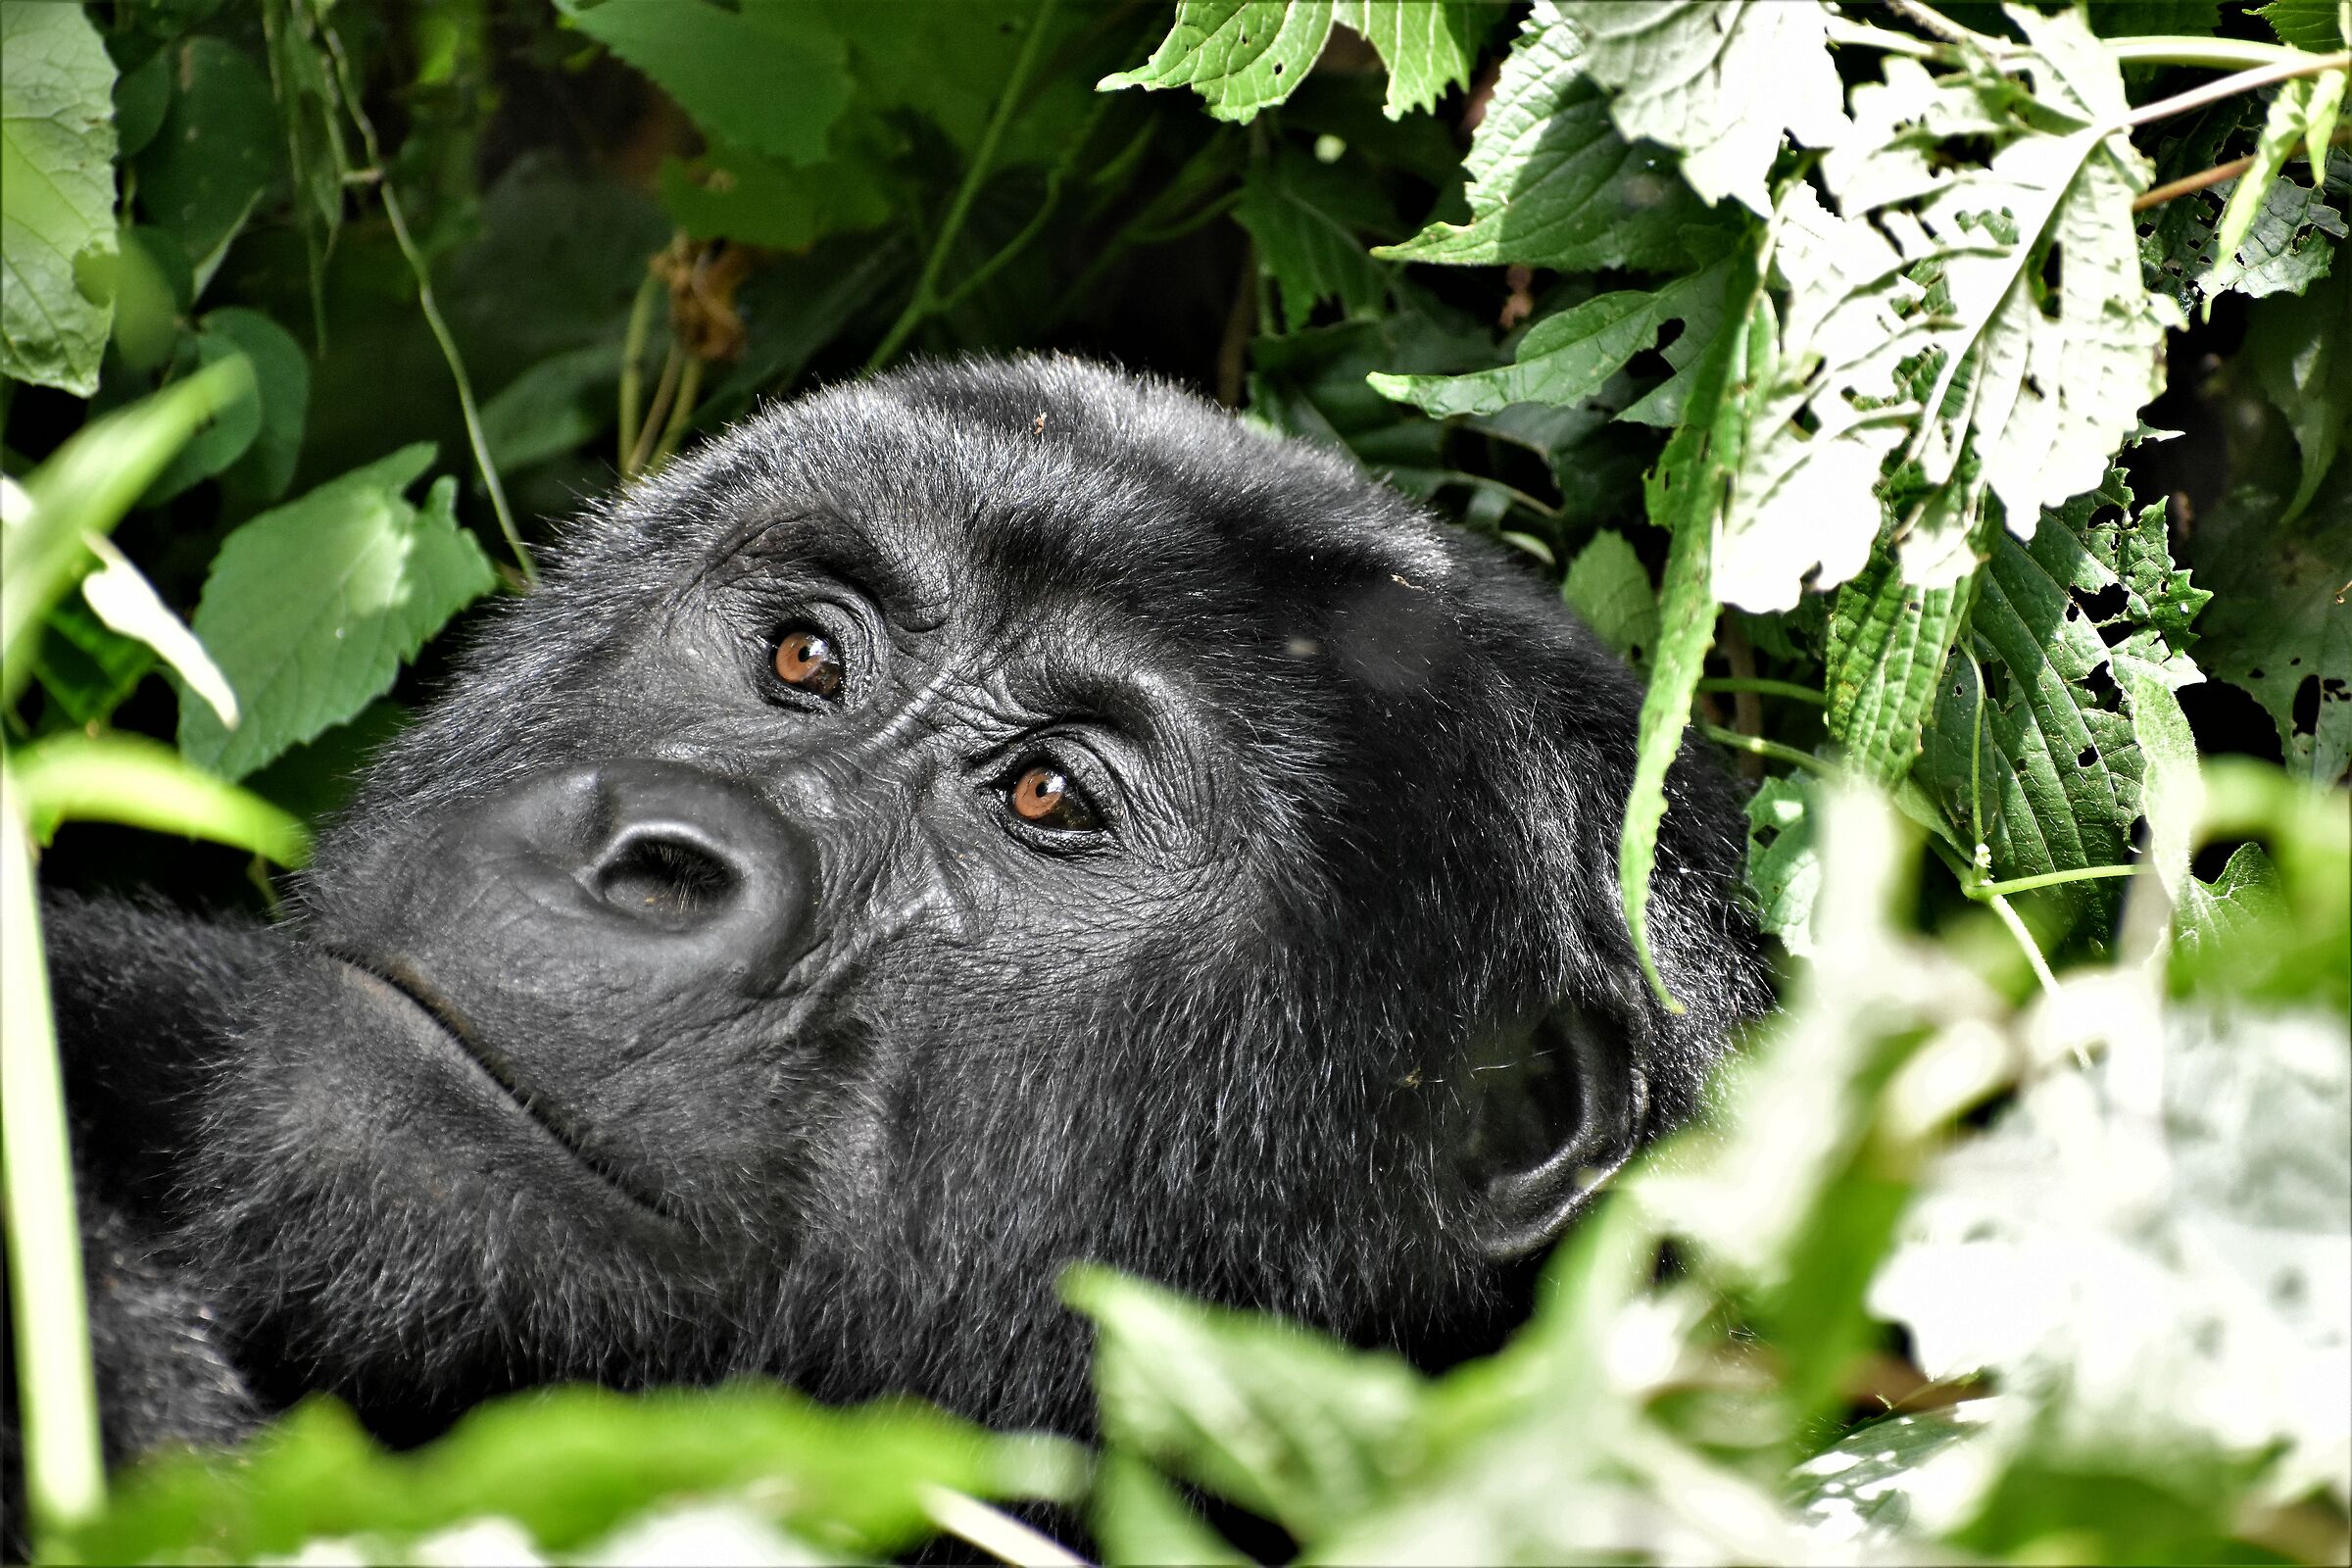 The thoughtful gorilla...